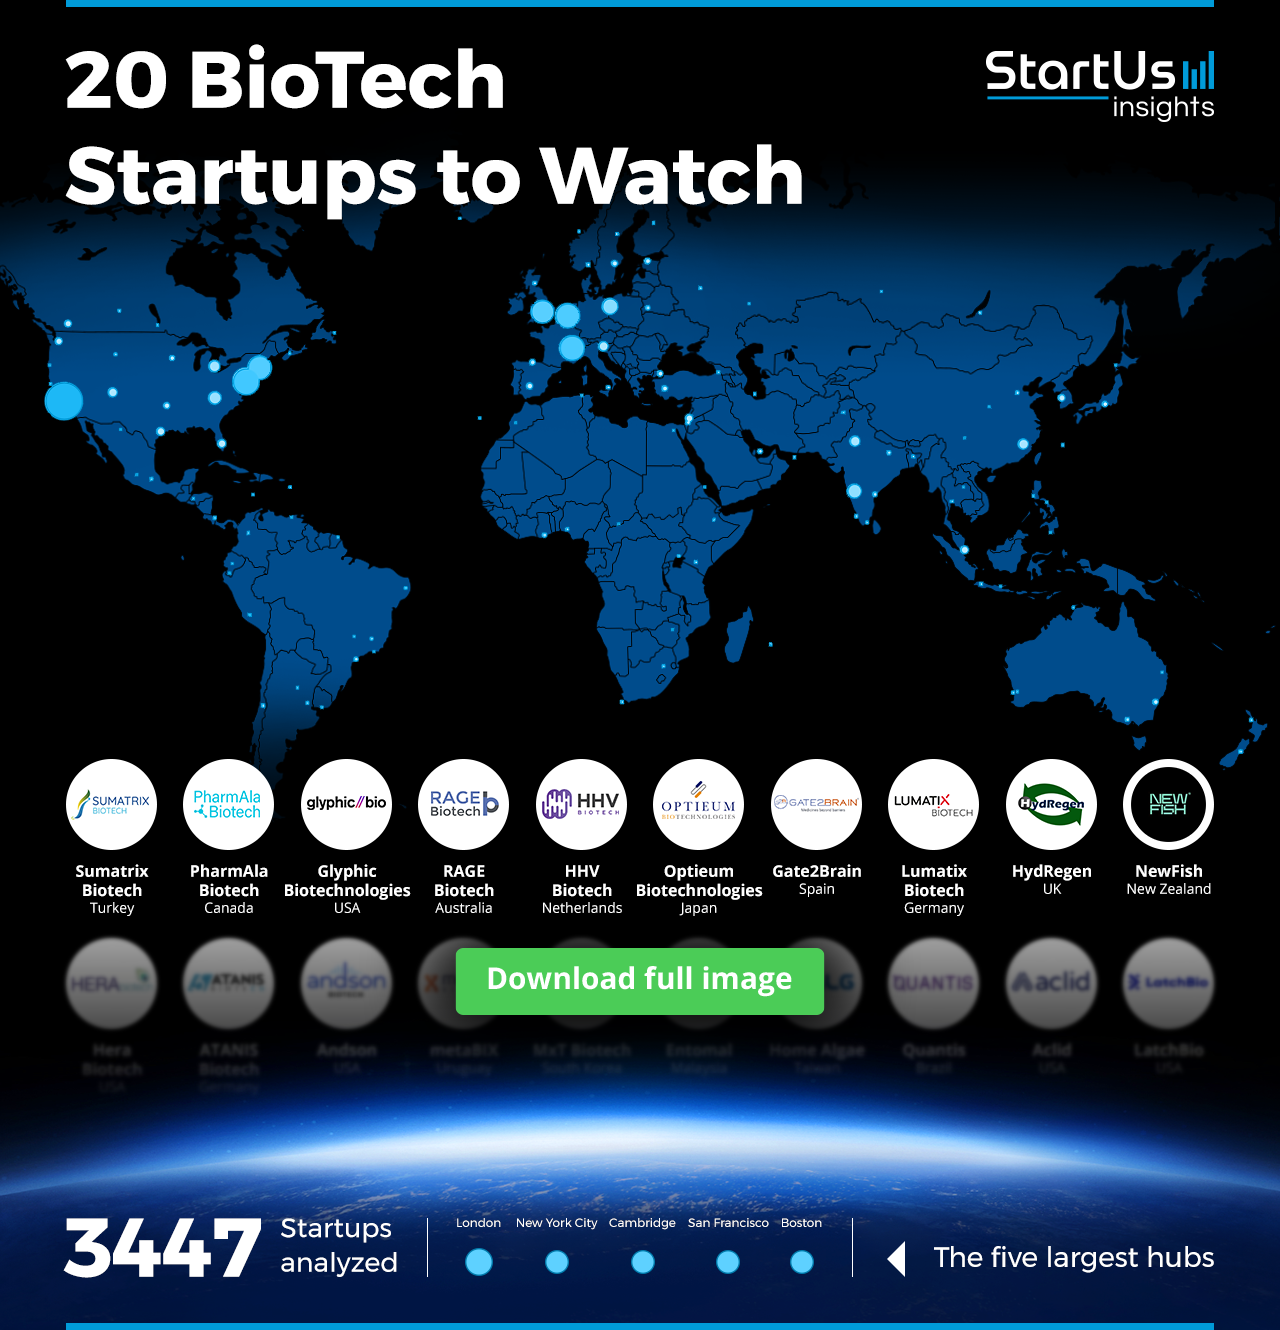 BioTech-Startups-to-Watch-Heat-Map-Blurred-StartUs-Insights-noresize